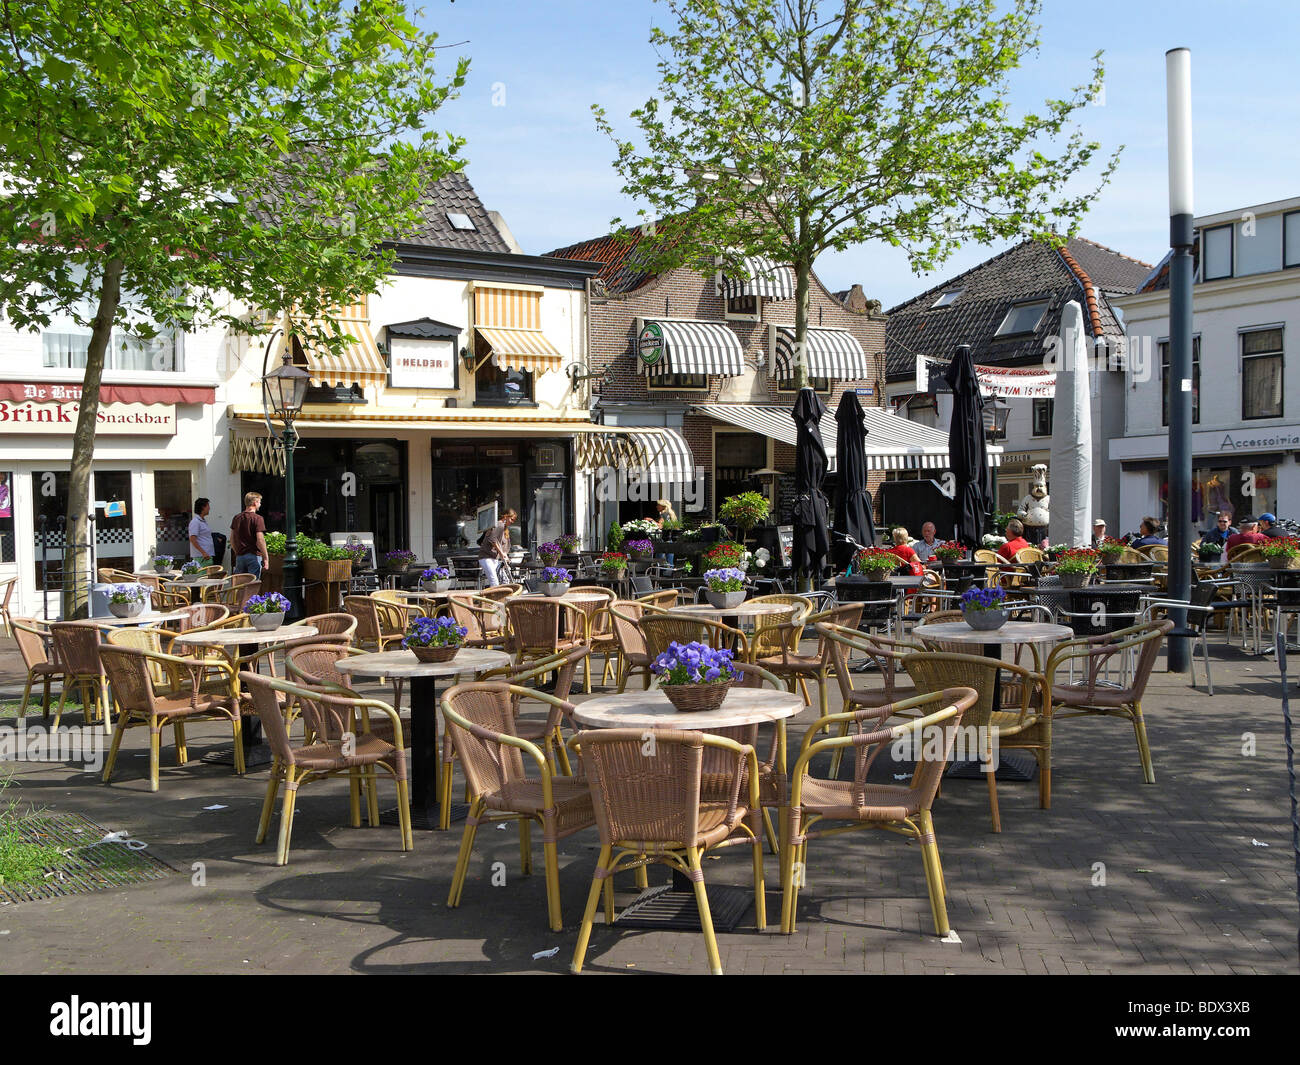 Pavement café at the main square, Breukelen, Holland, Netherlands, Europe Stock Photo